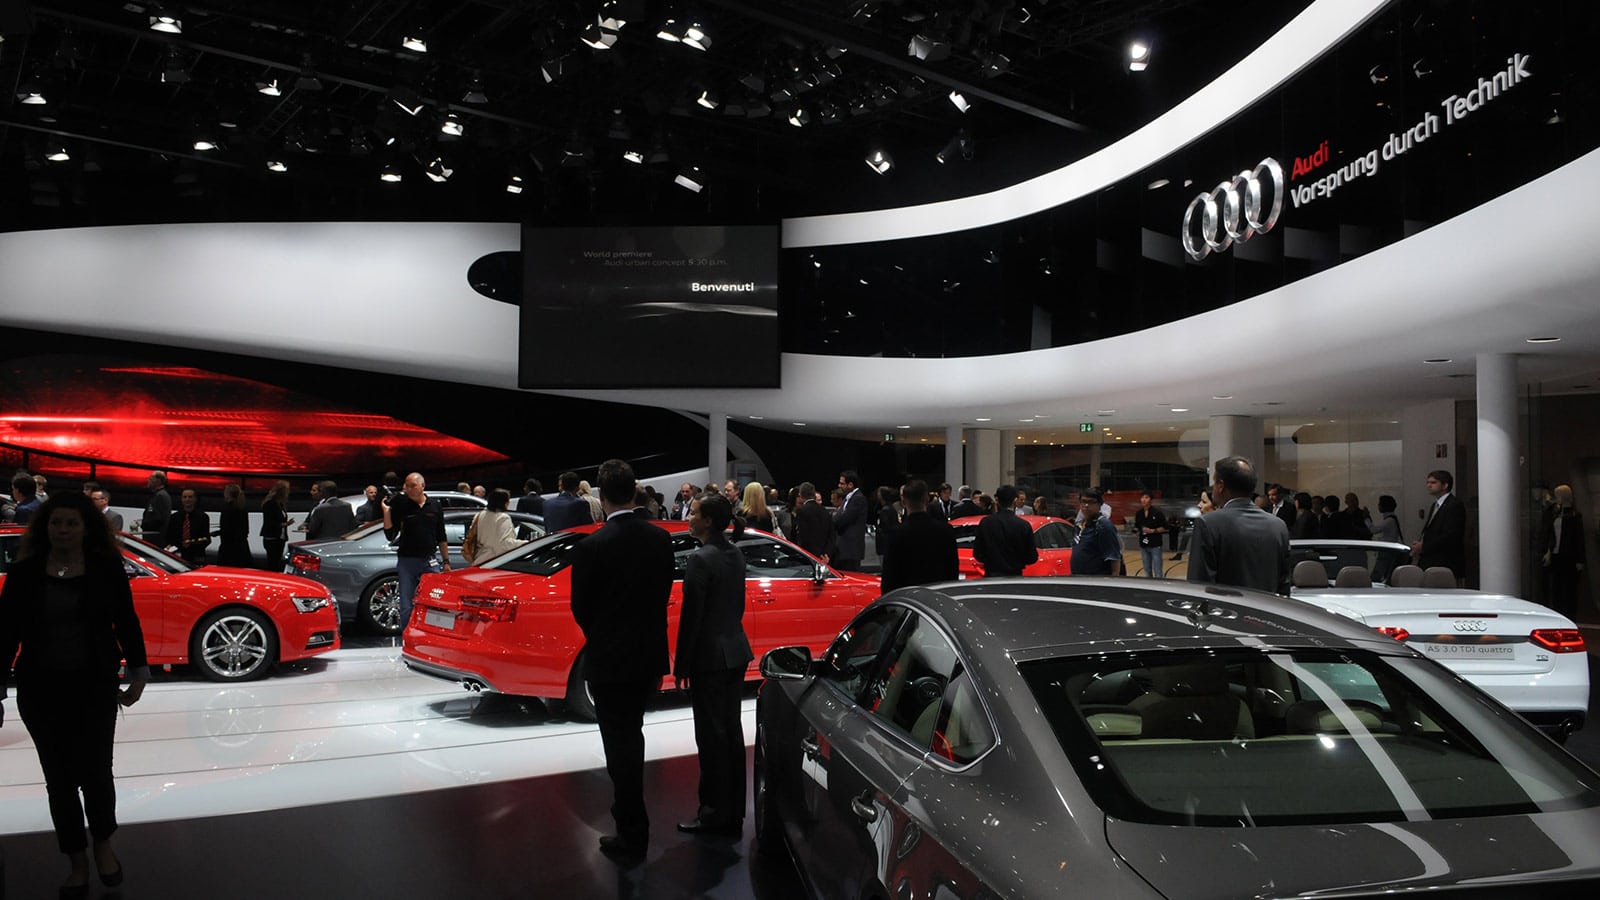 Meyer Sound D-Mitri and Loudspeakers Rev up Media Impact for Audi at 2011 Frankfurt Car Show